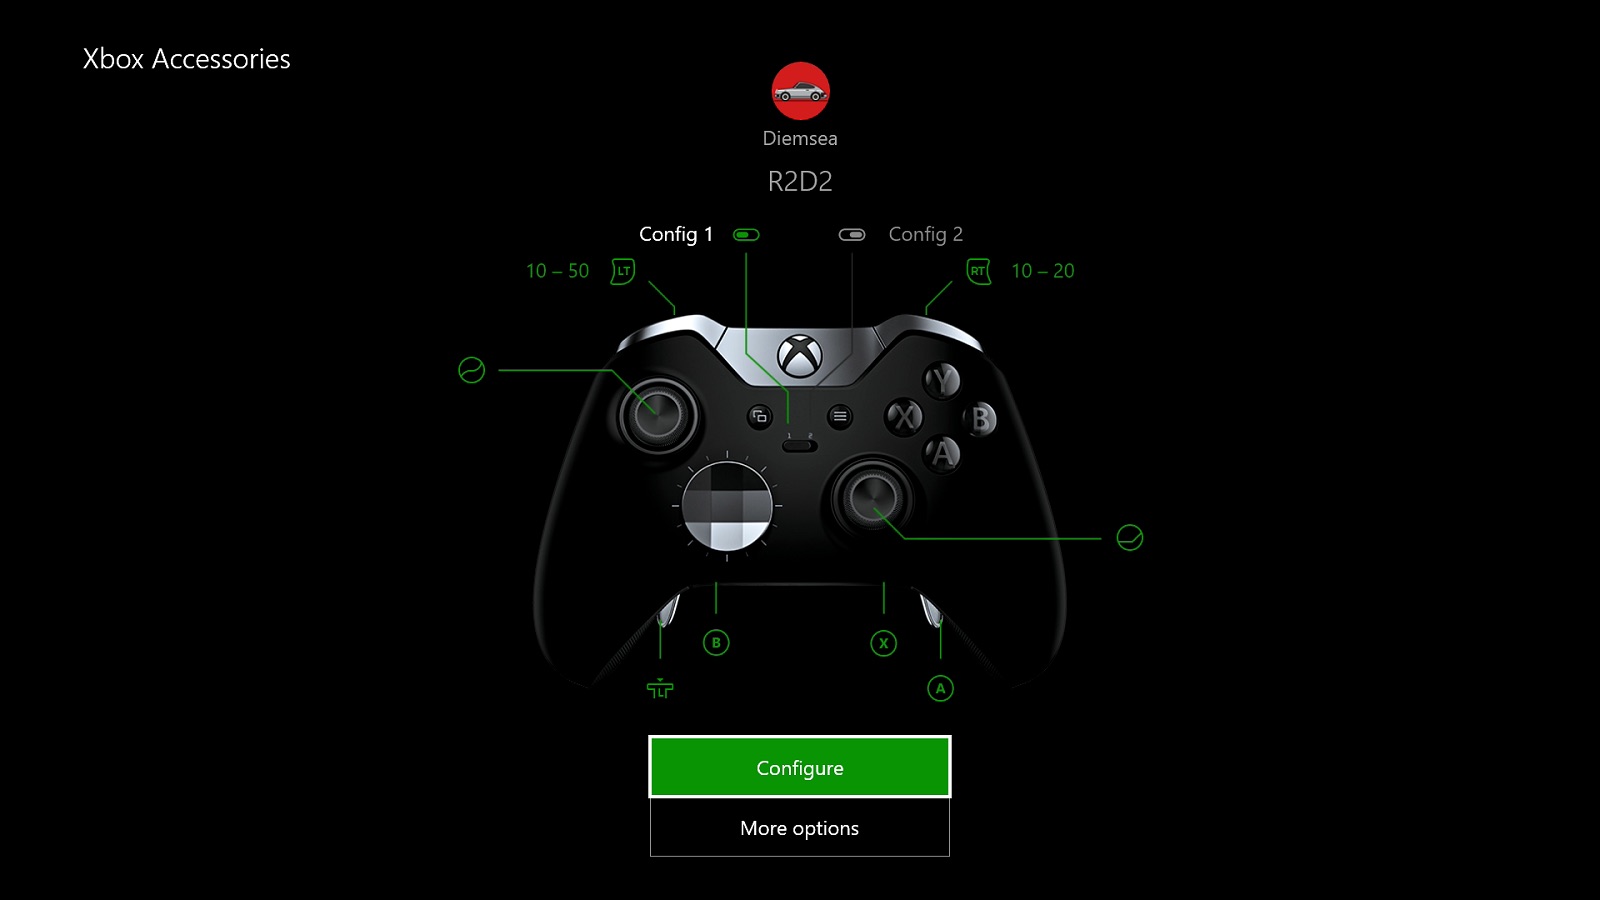 Accessories - Mise a Jour Xbox One - Fevrier 2016